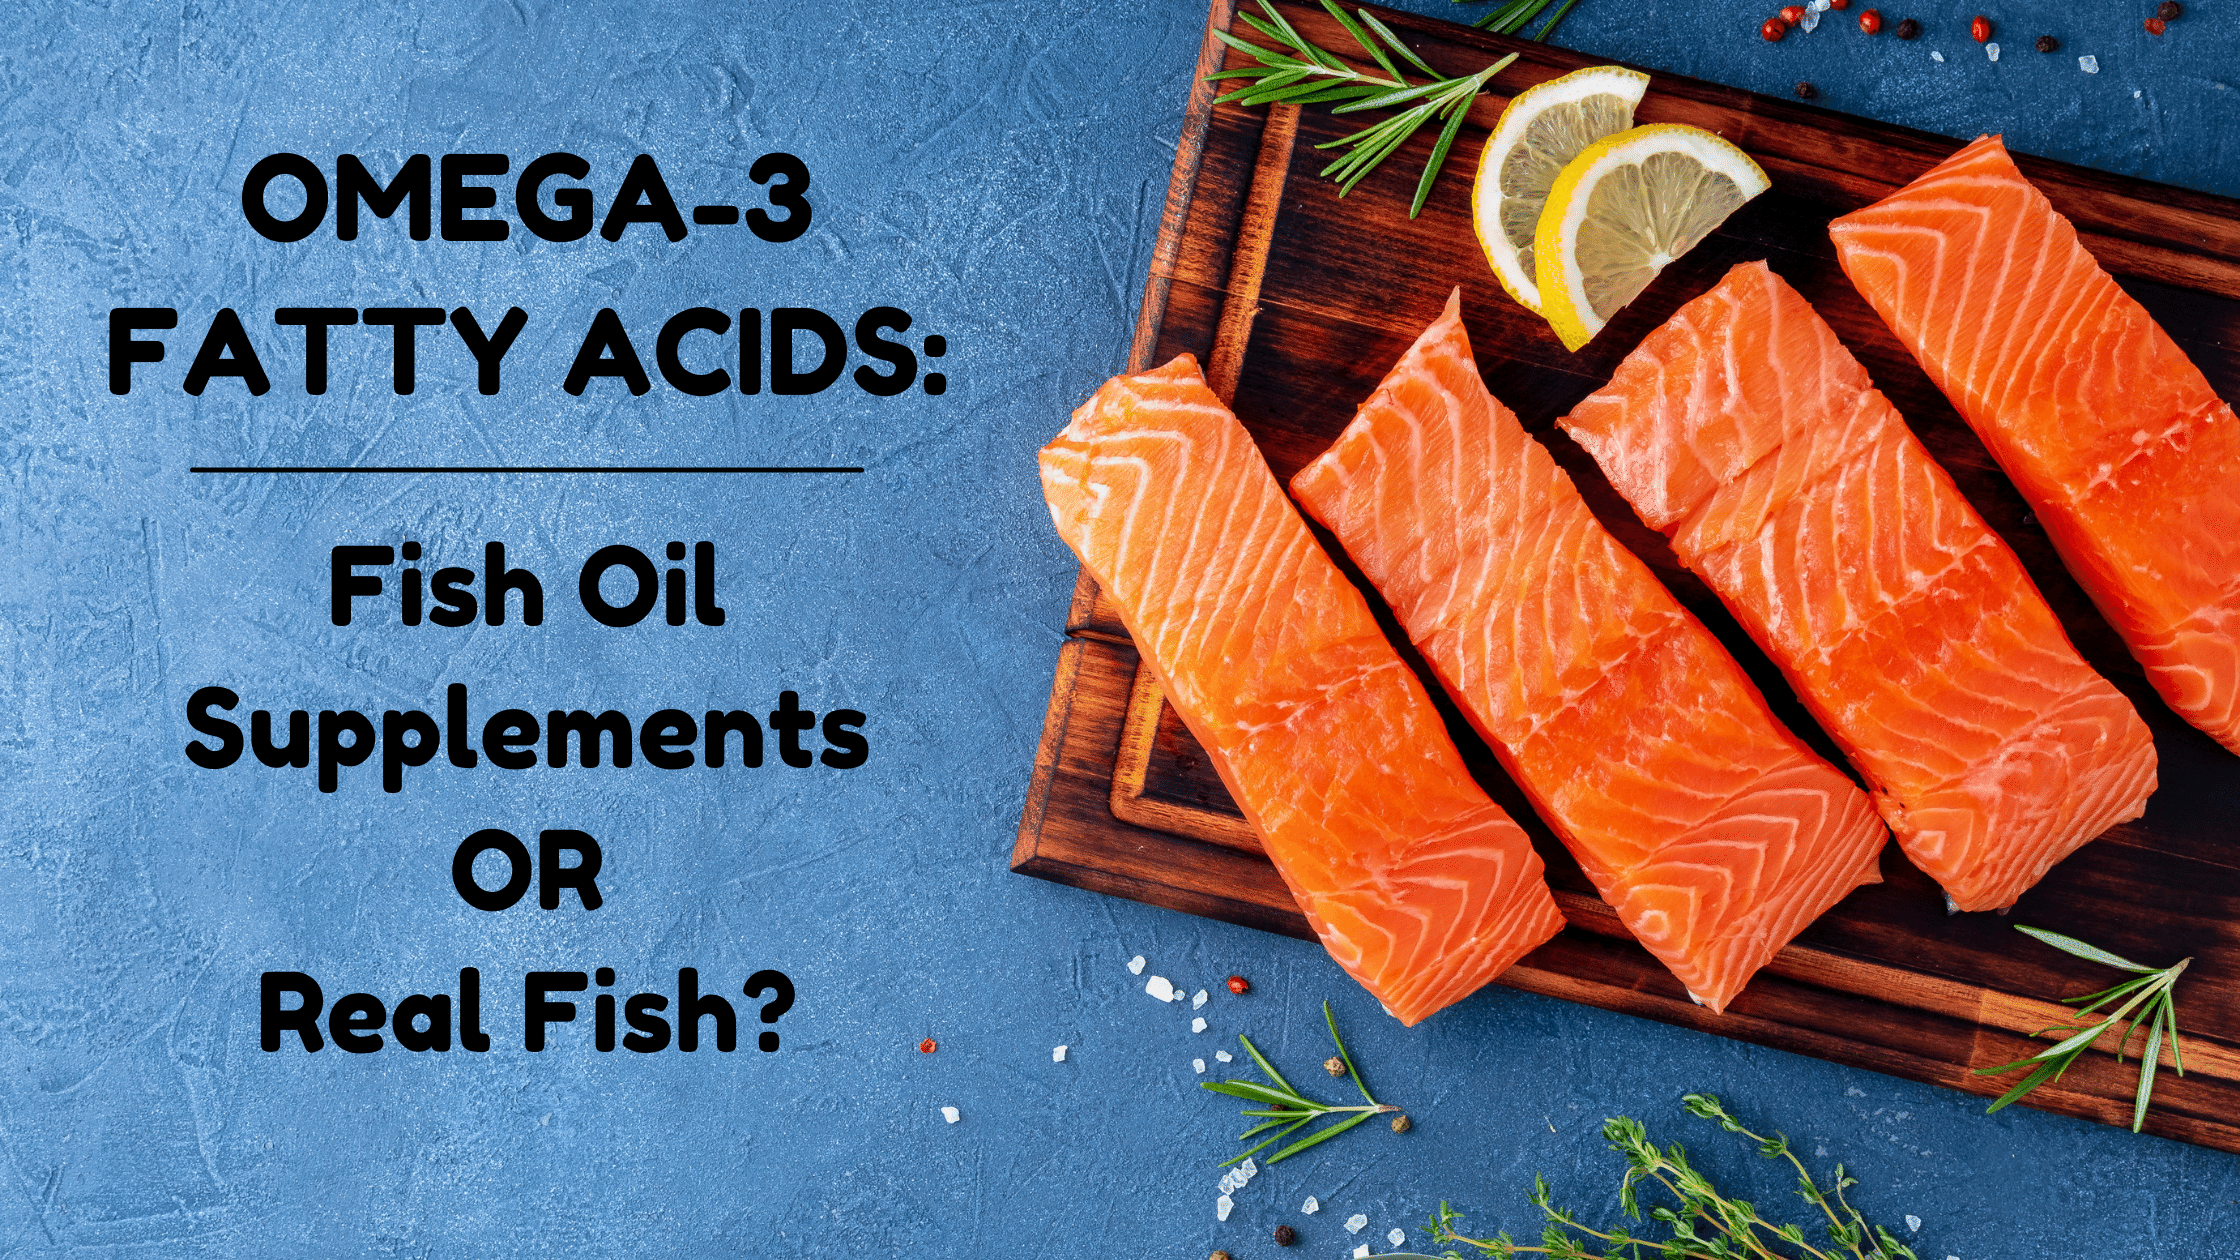 omega 3 fatty acids: fish oil supplements vs real fish